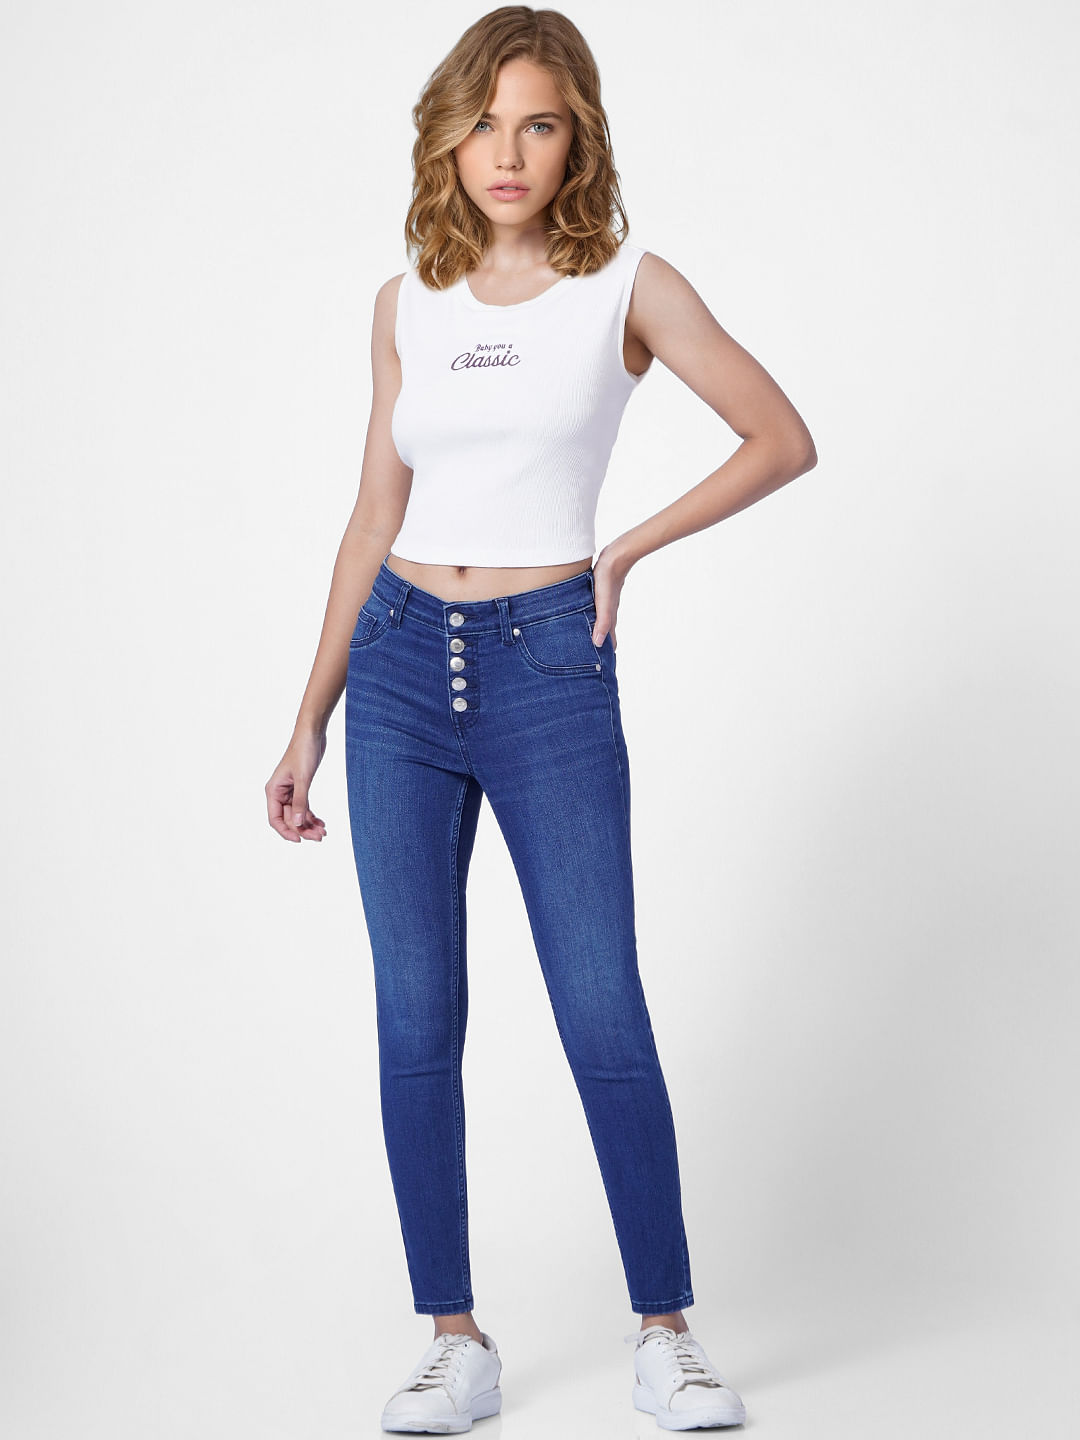 Medium  Large Women High Waisted Denim Jeans